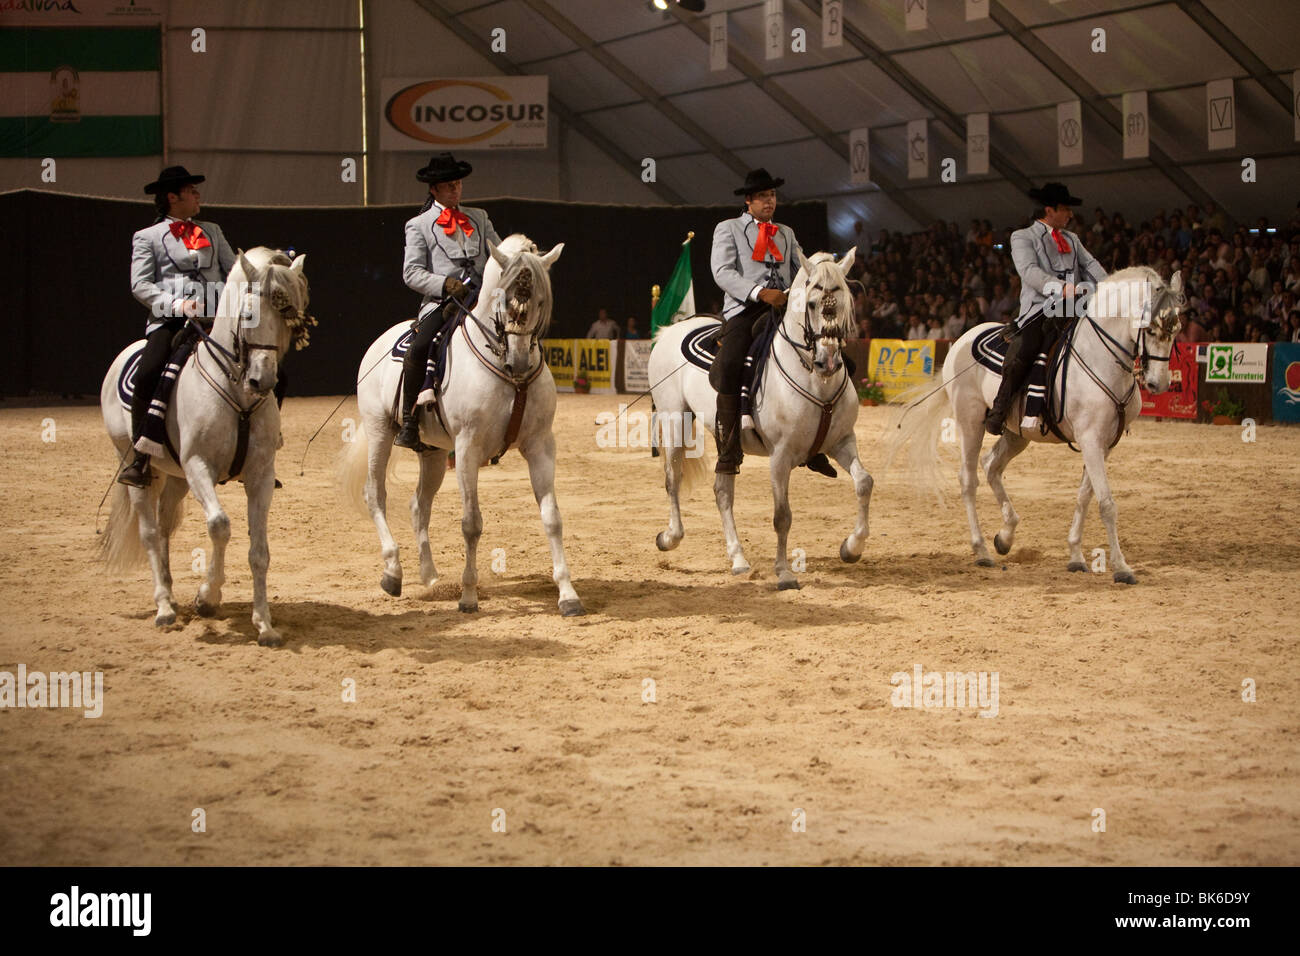 Exhibition of Spanish thoroughbred horses, Spain Stock Photo